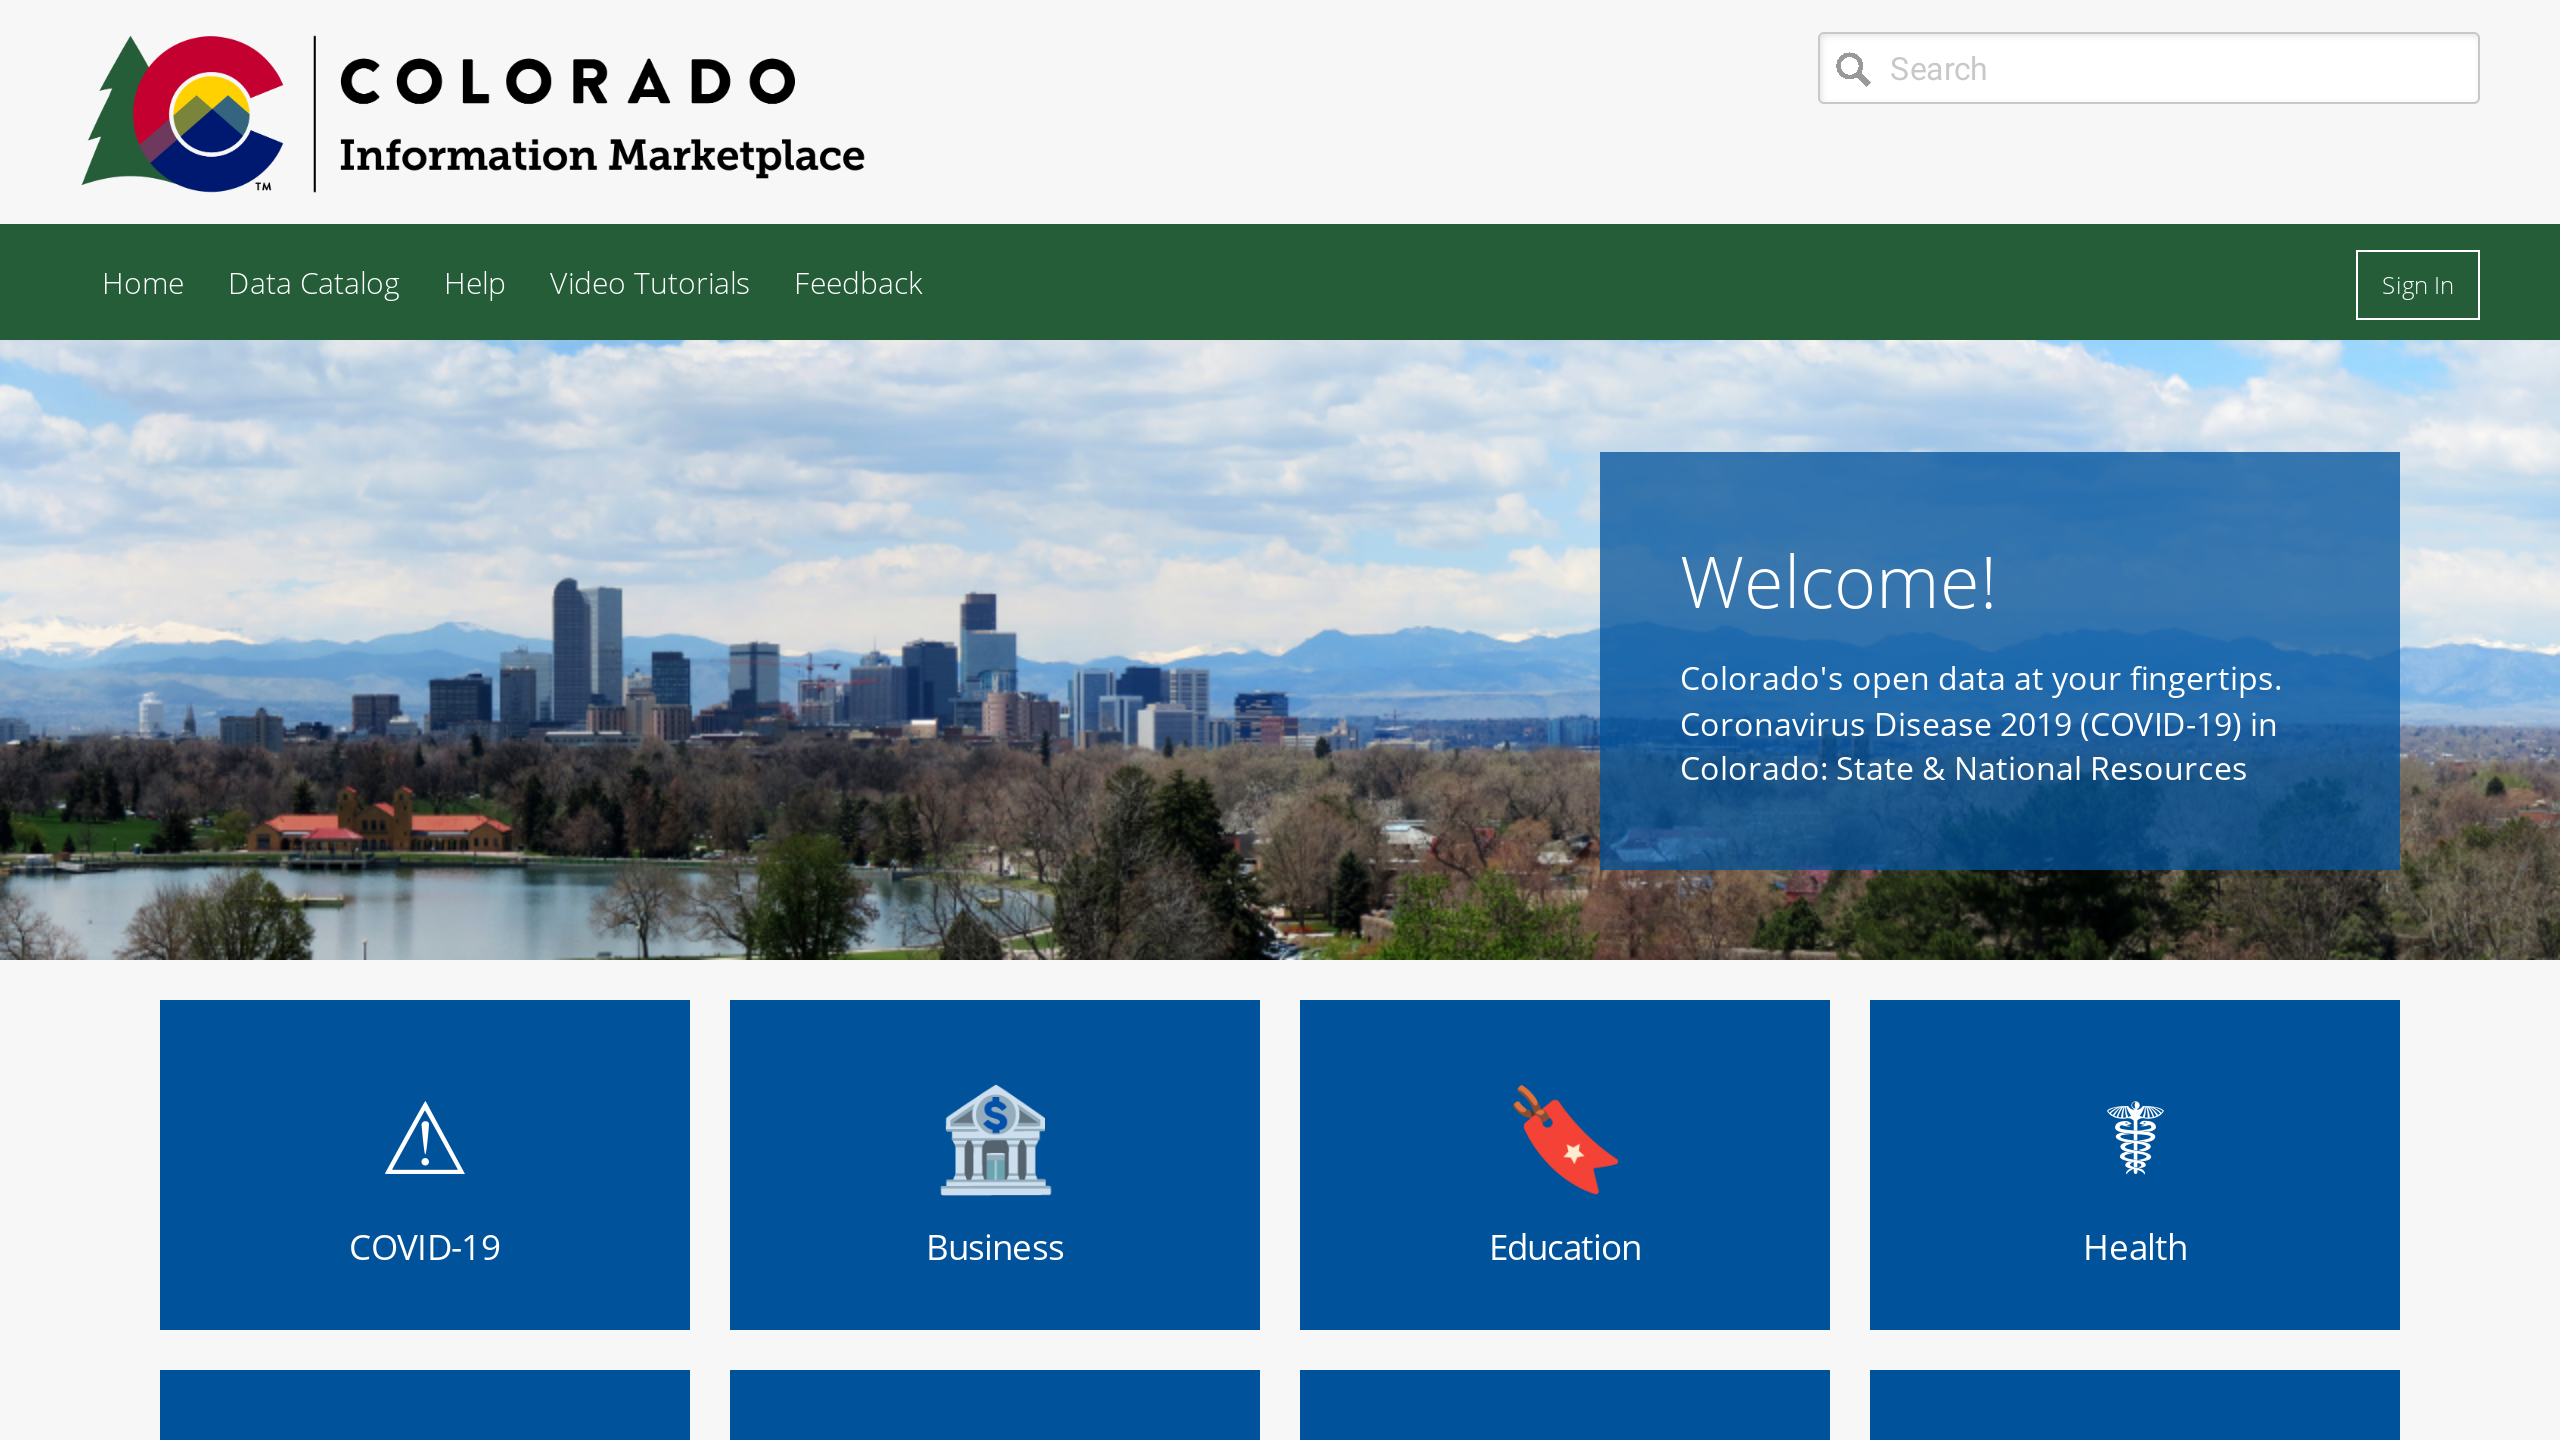 Colorado Information Marketplace's website screenshot